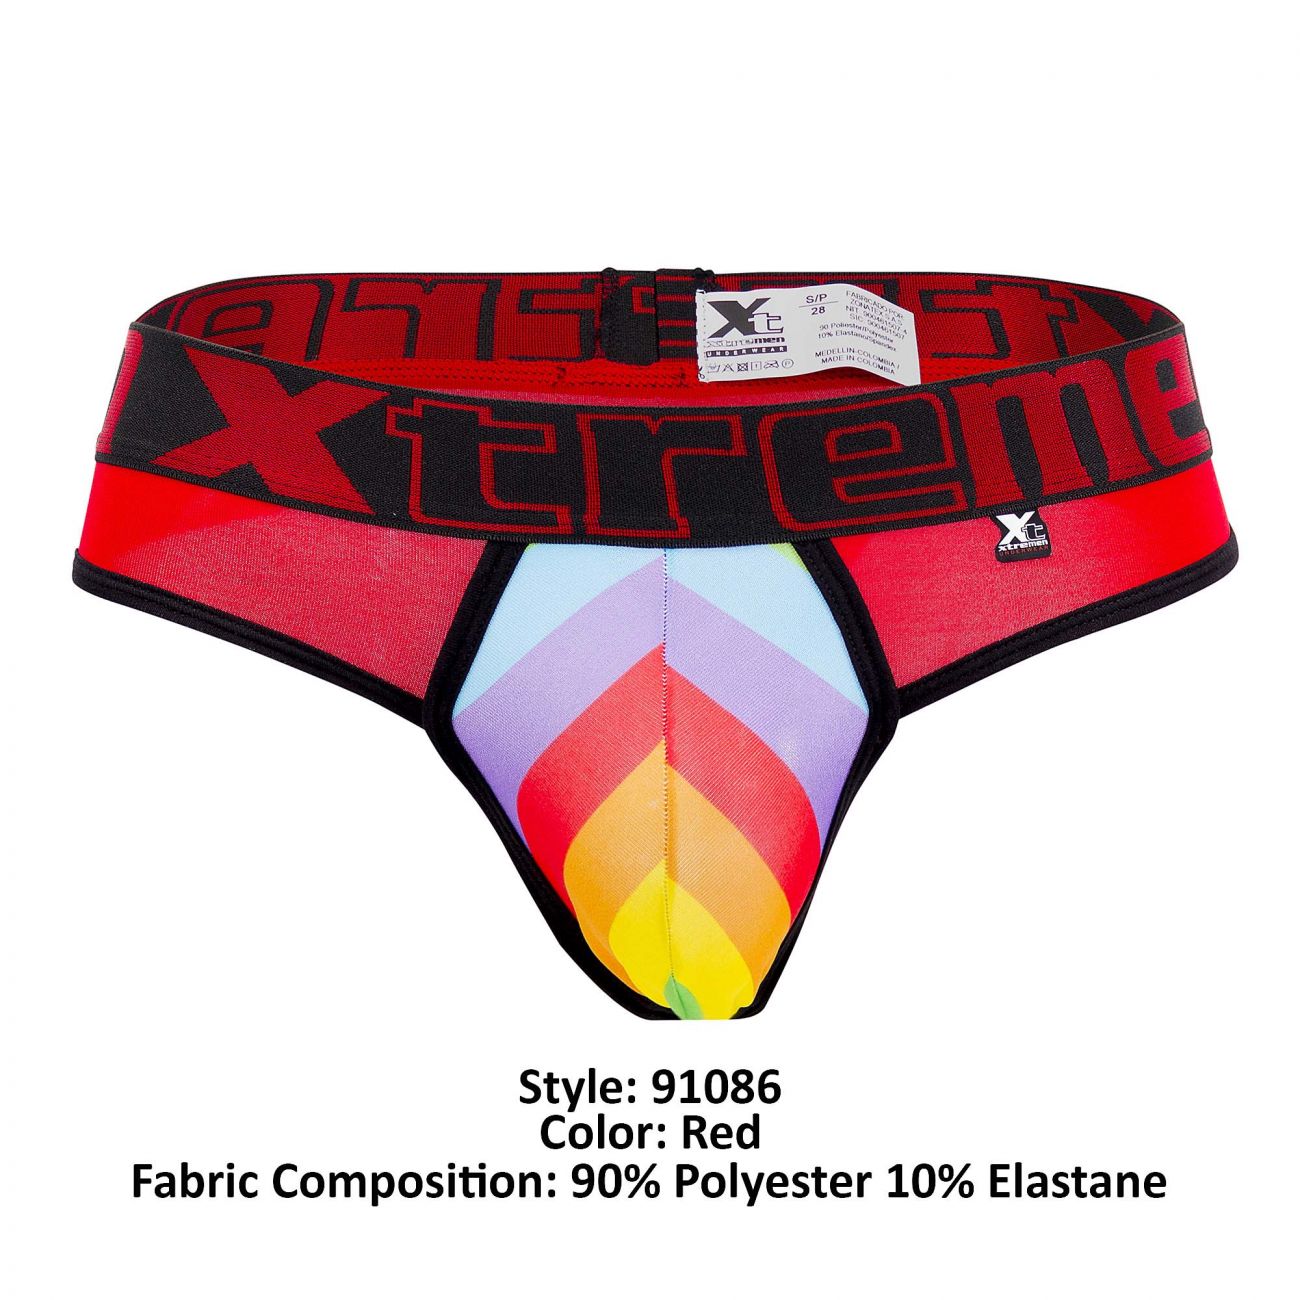 Xtremen 91086 Microfiber Pride Thongs Color Red